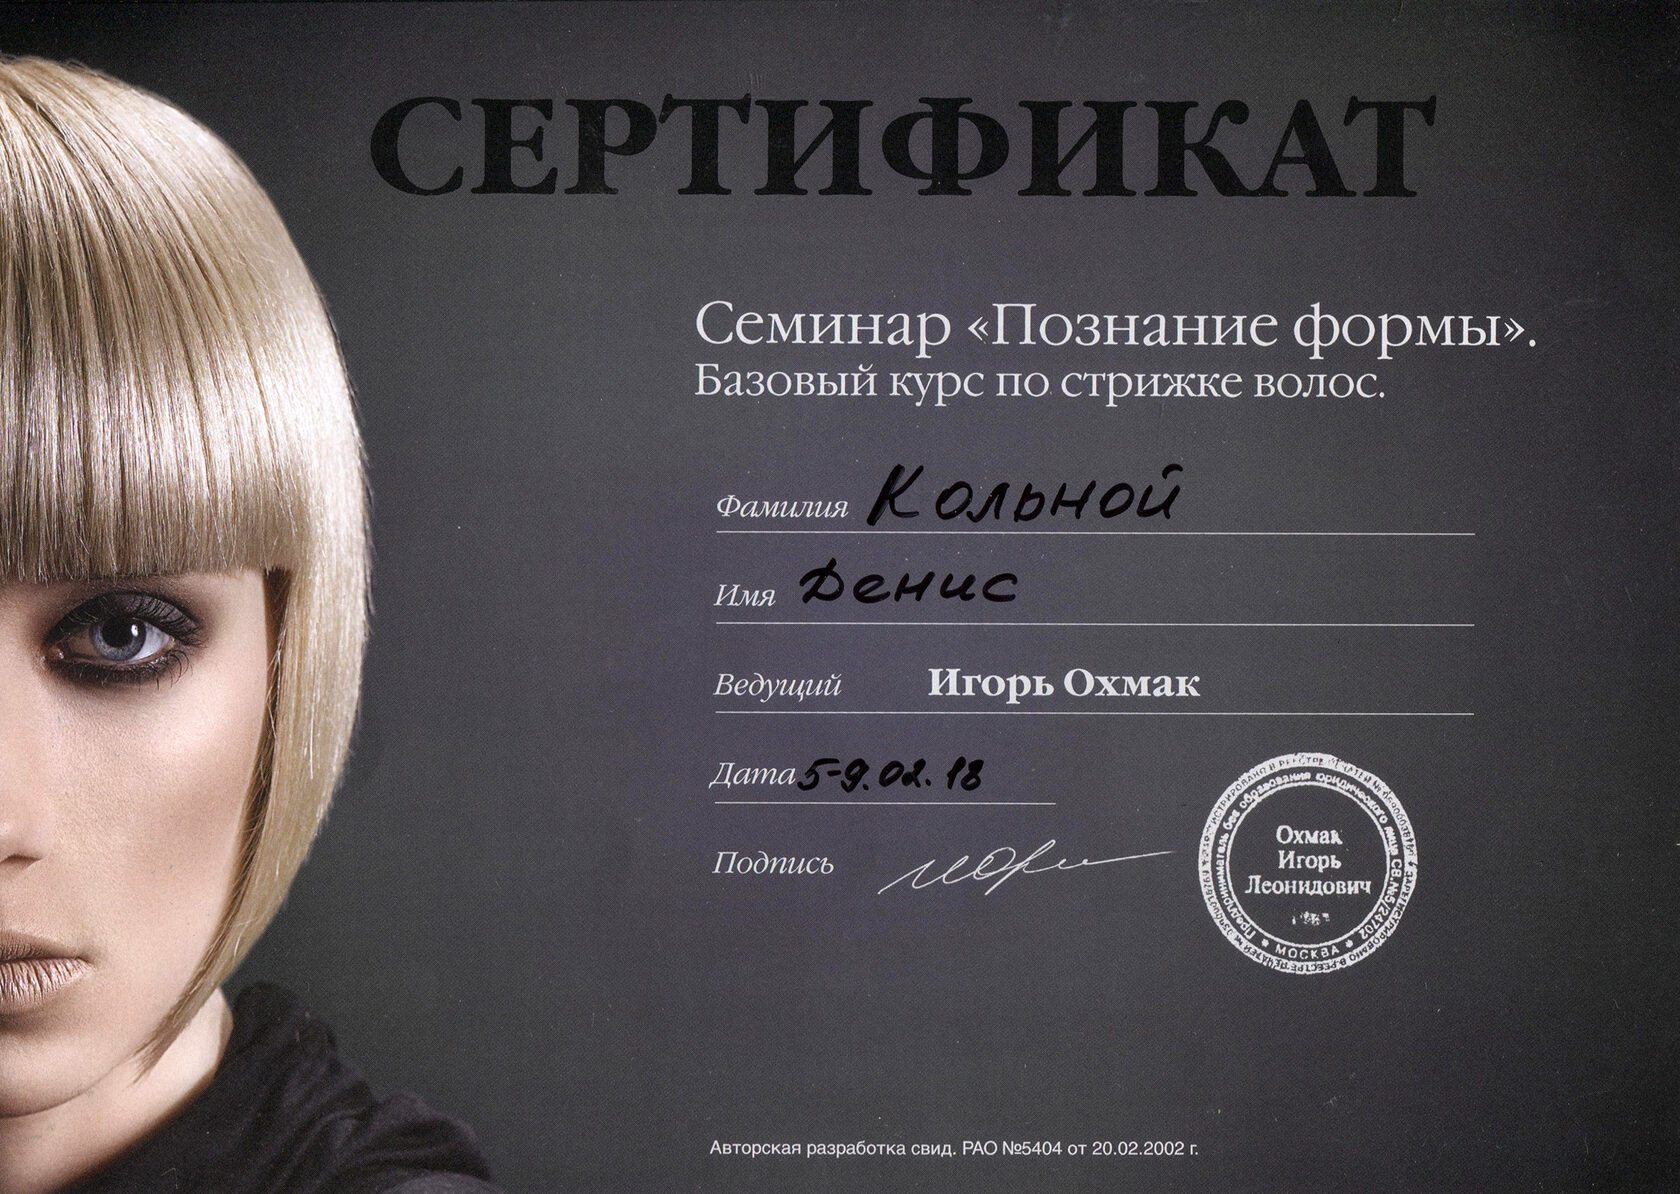 Сертификат в салон красоты